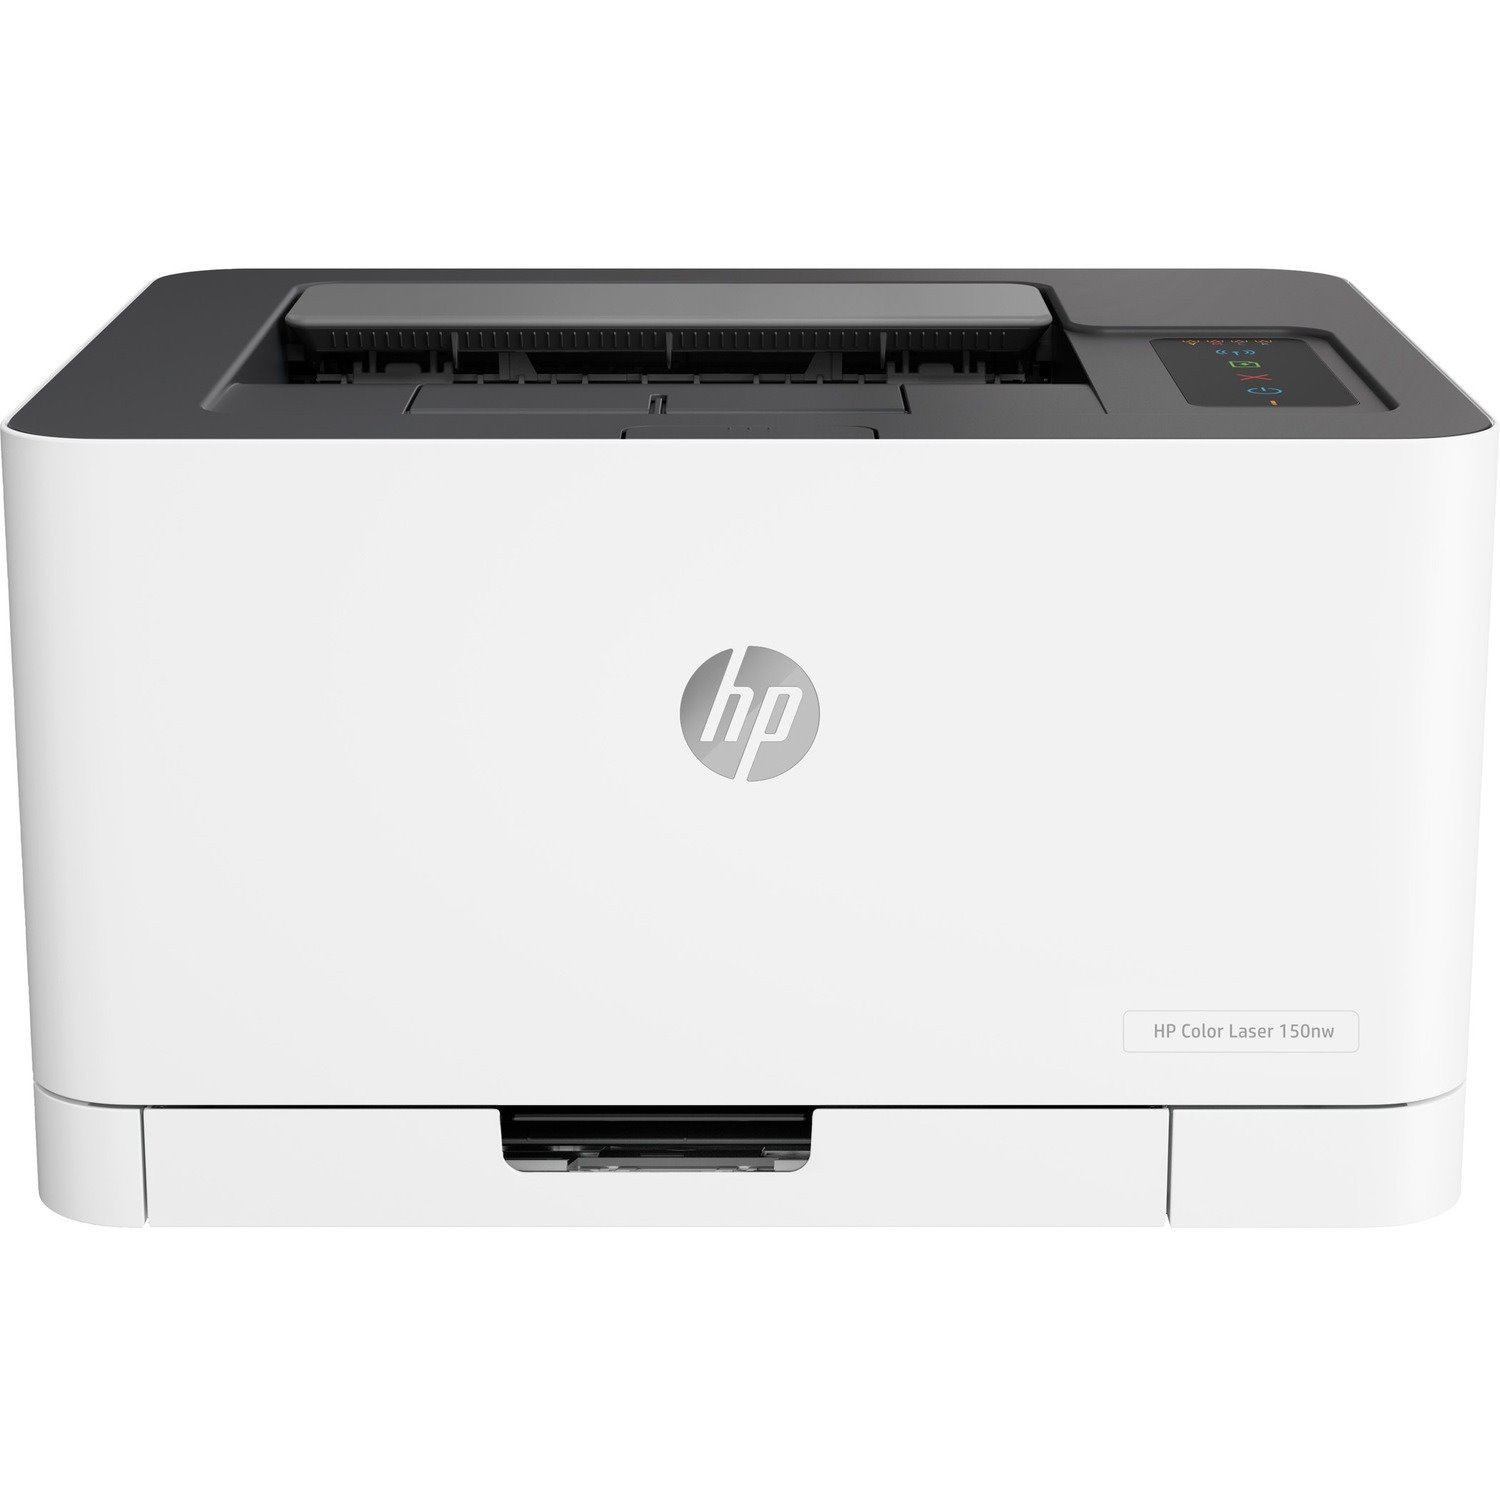 HP 150nw Desktop Laser Printer - Colour